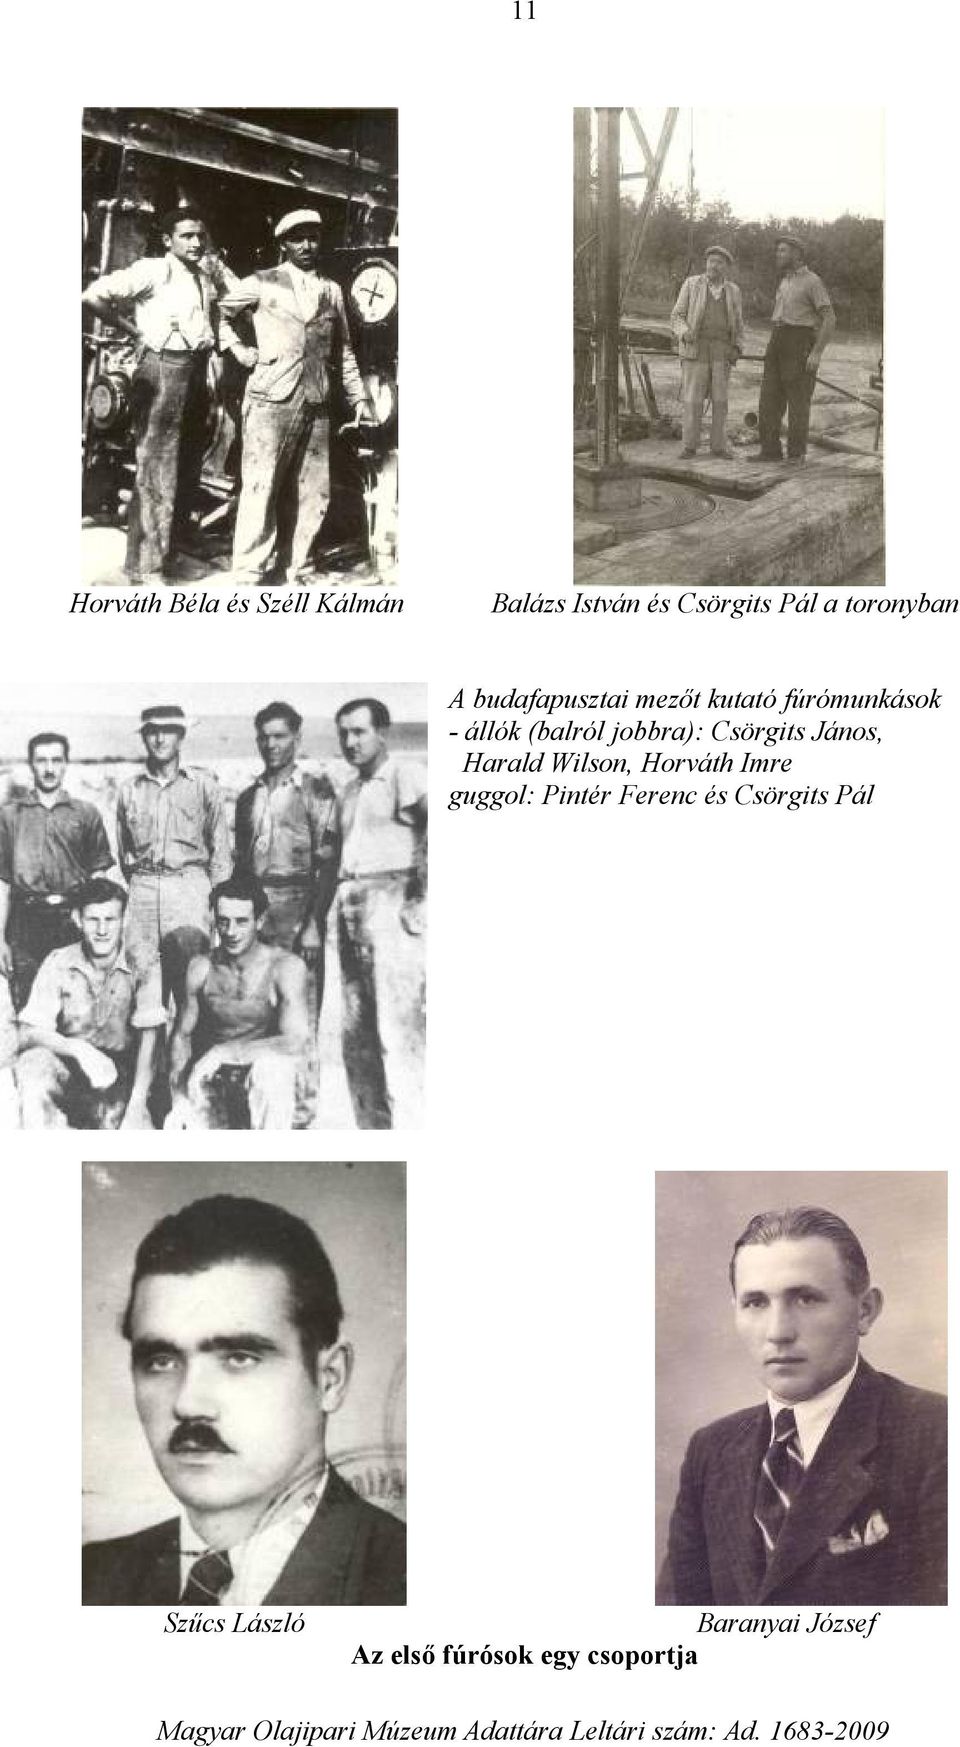 jobbra): Csörgits János, Harald Wilson, Horváth Imre guggol: Pintér